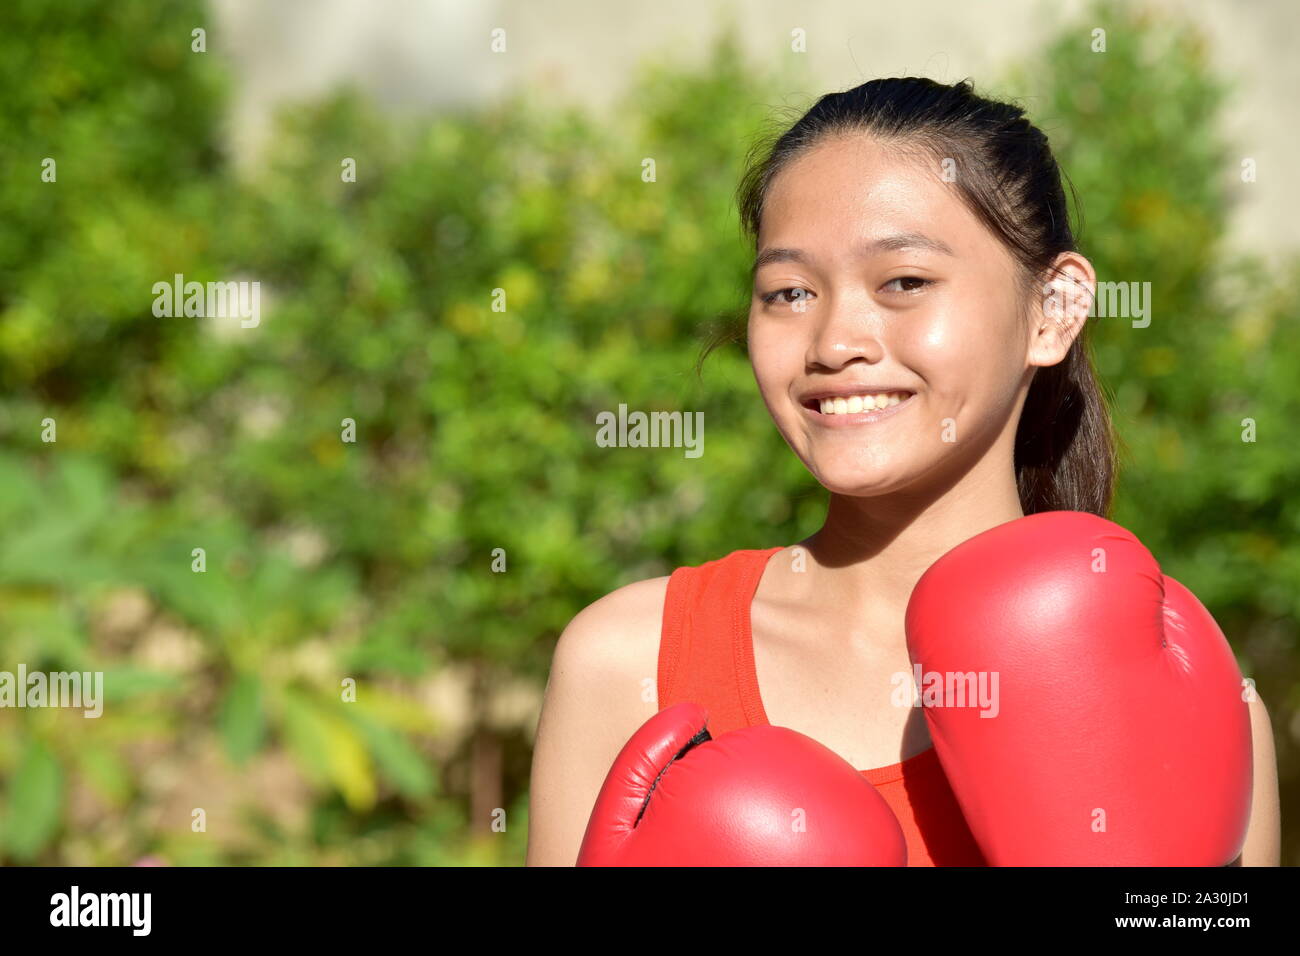 A Happy Female Boxer Athlete Stock Photo